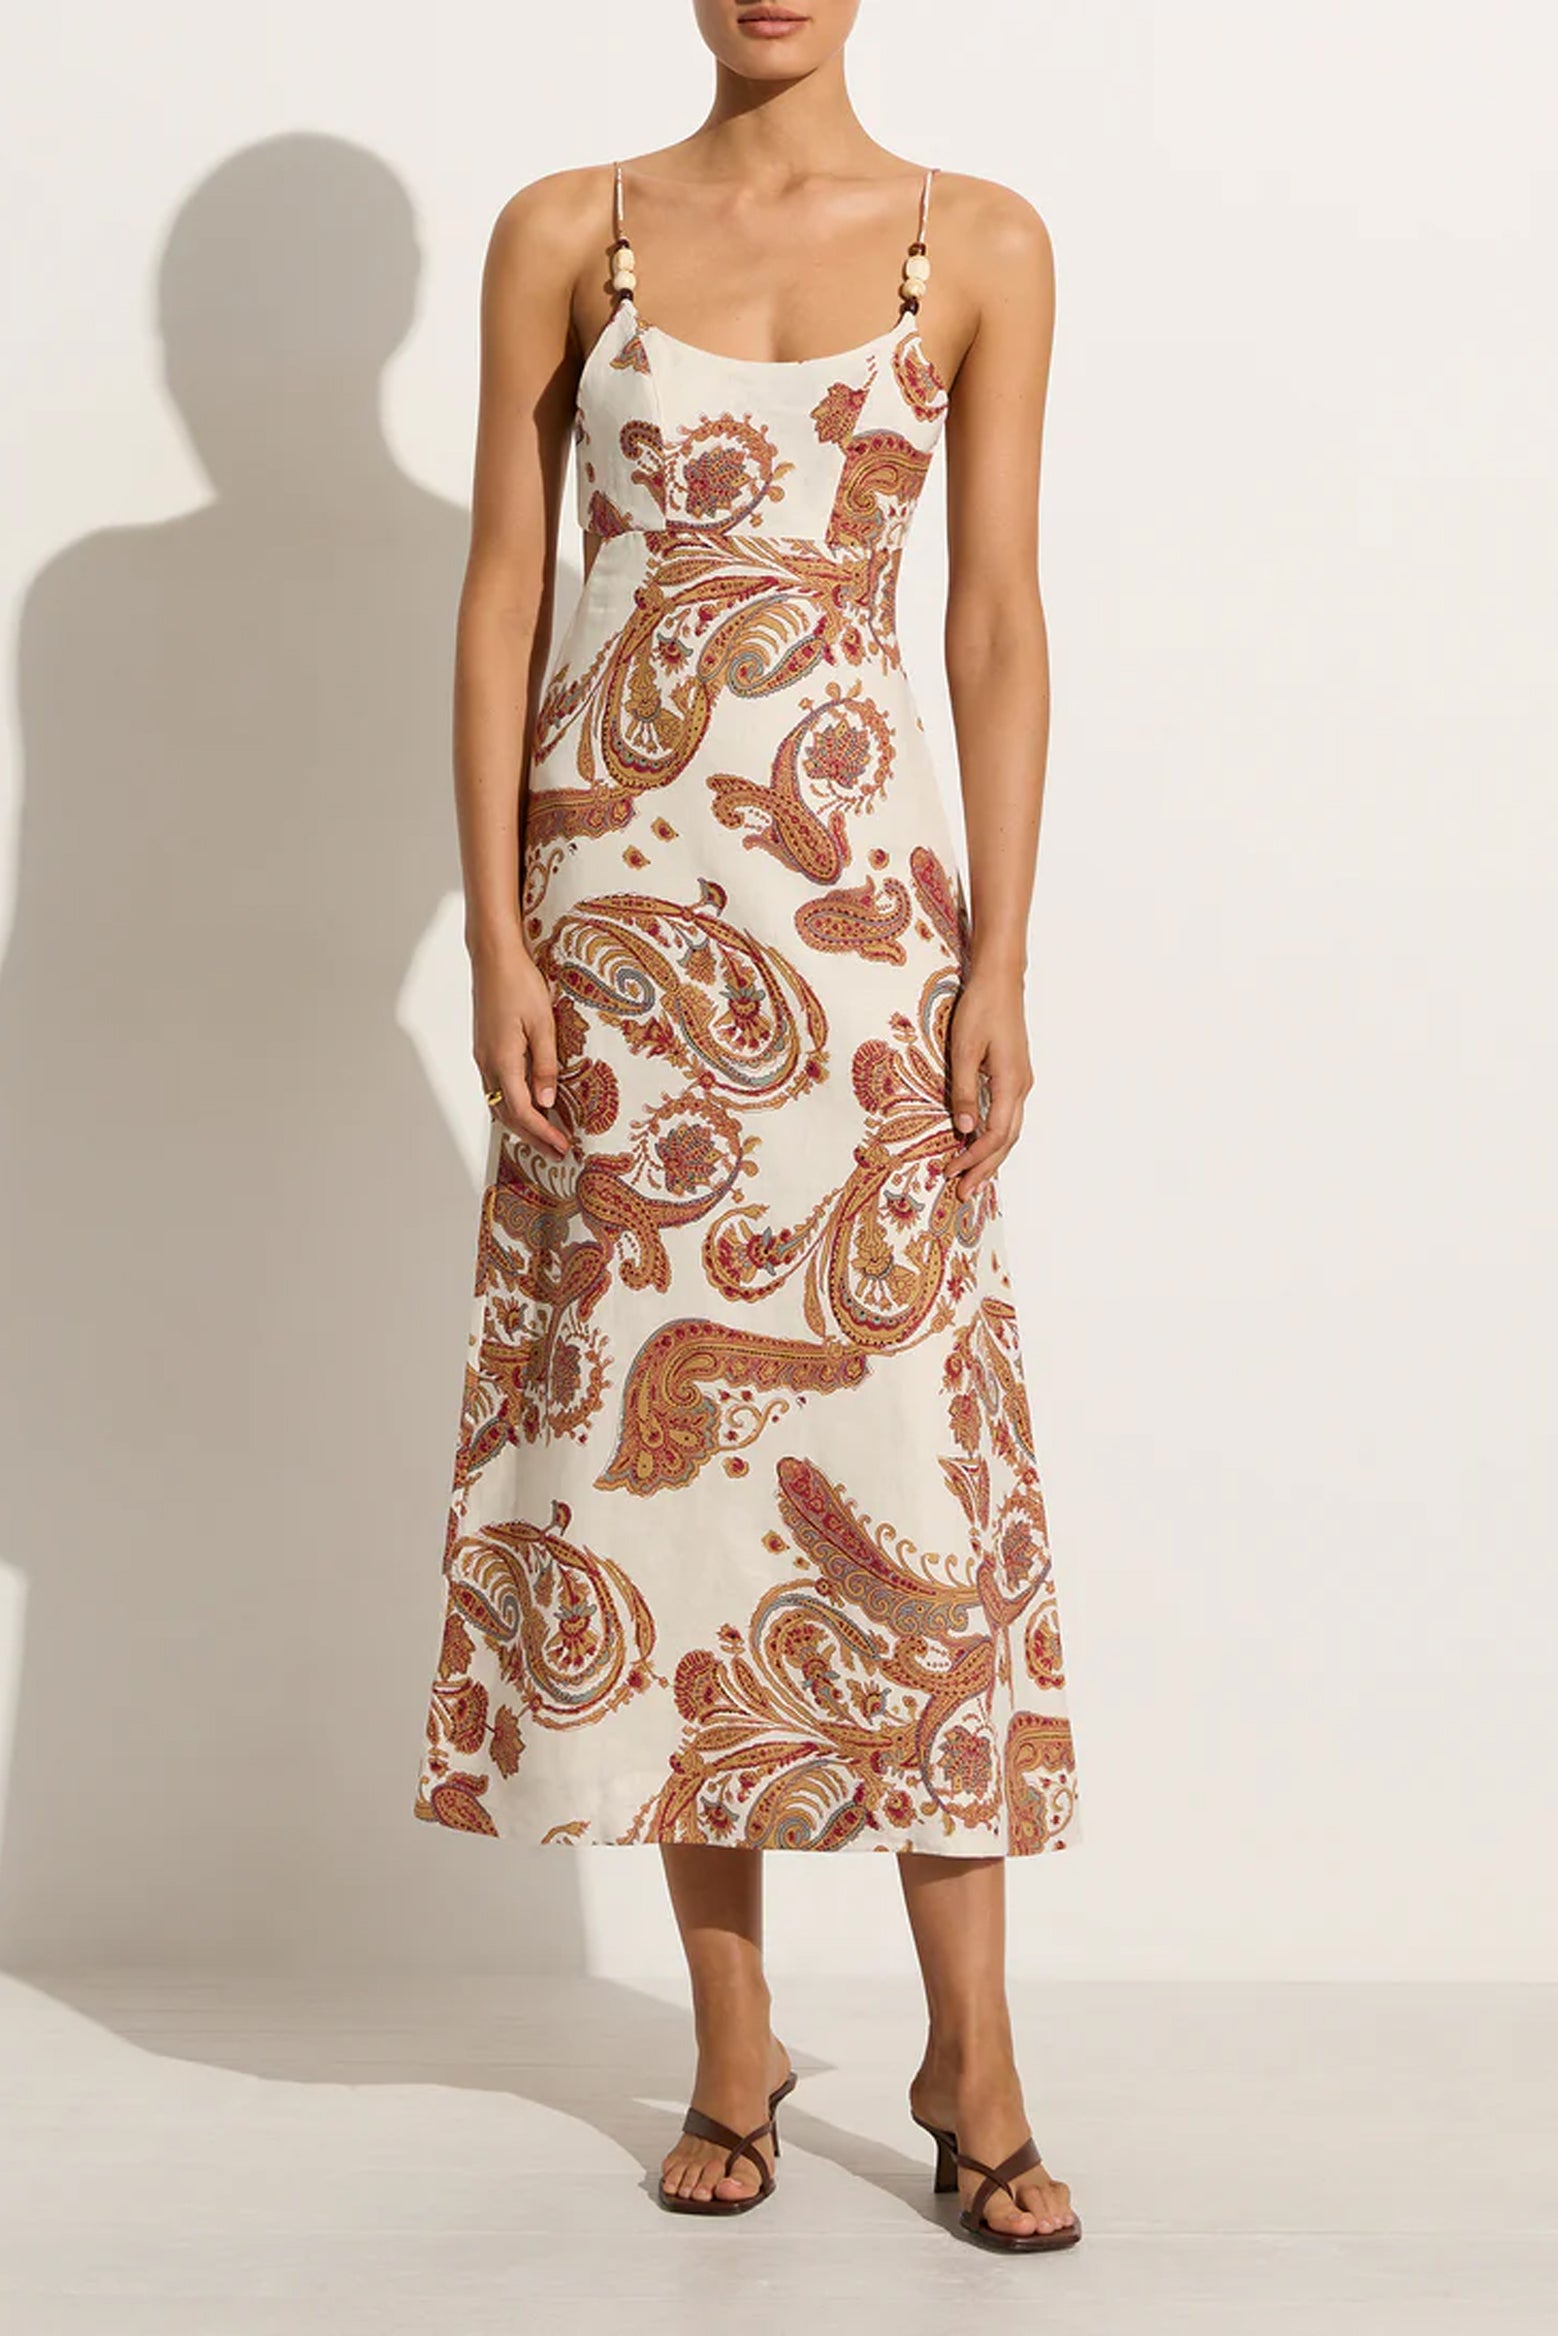 Faithfull The Brand Regina Midi Dress in Alessia Print available at The New Trend Australia. 